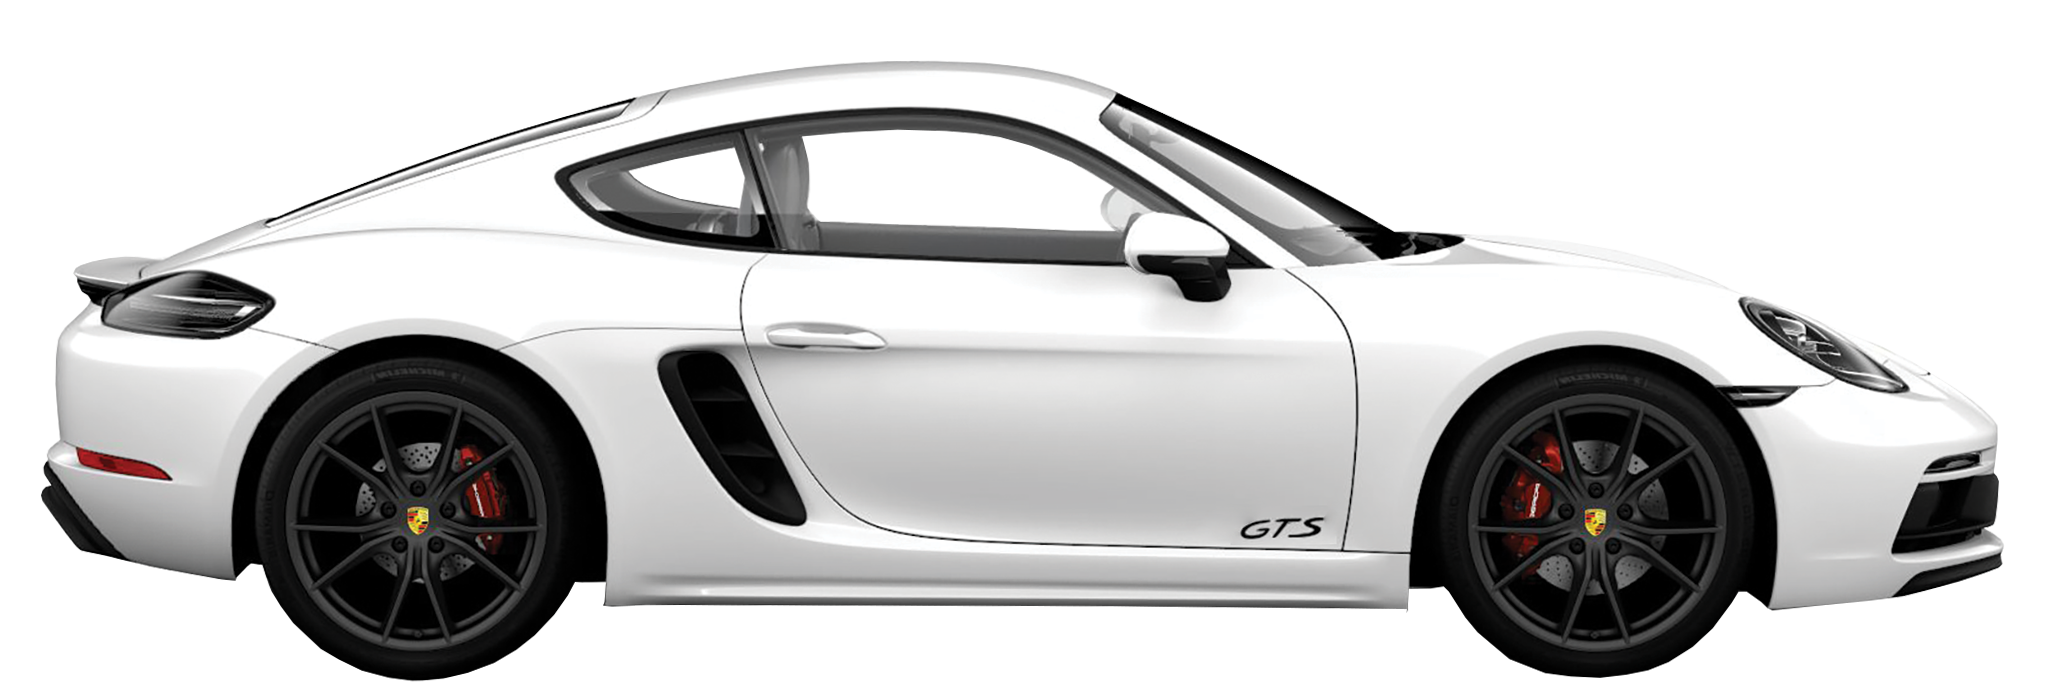 Drive Supercars in Las Vegas | Speedvegas.com - Porsche Cayman GTS